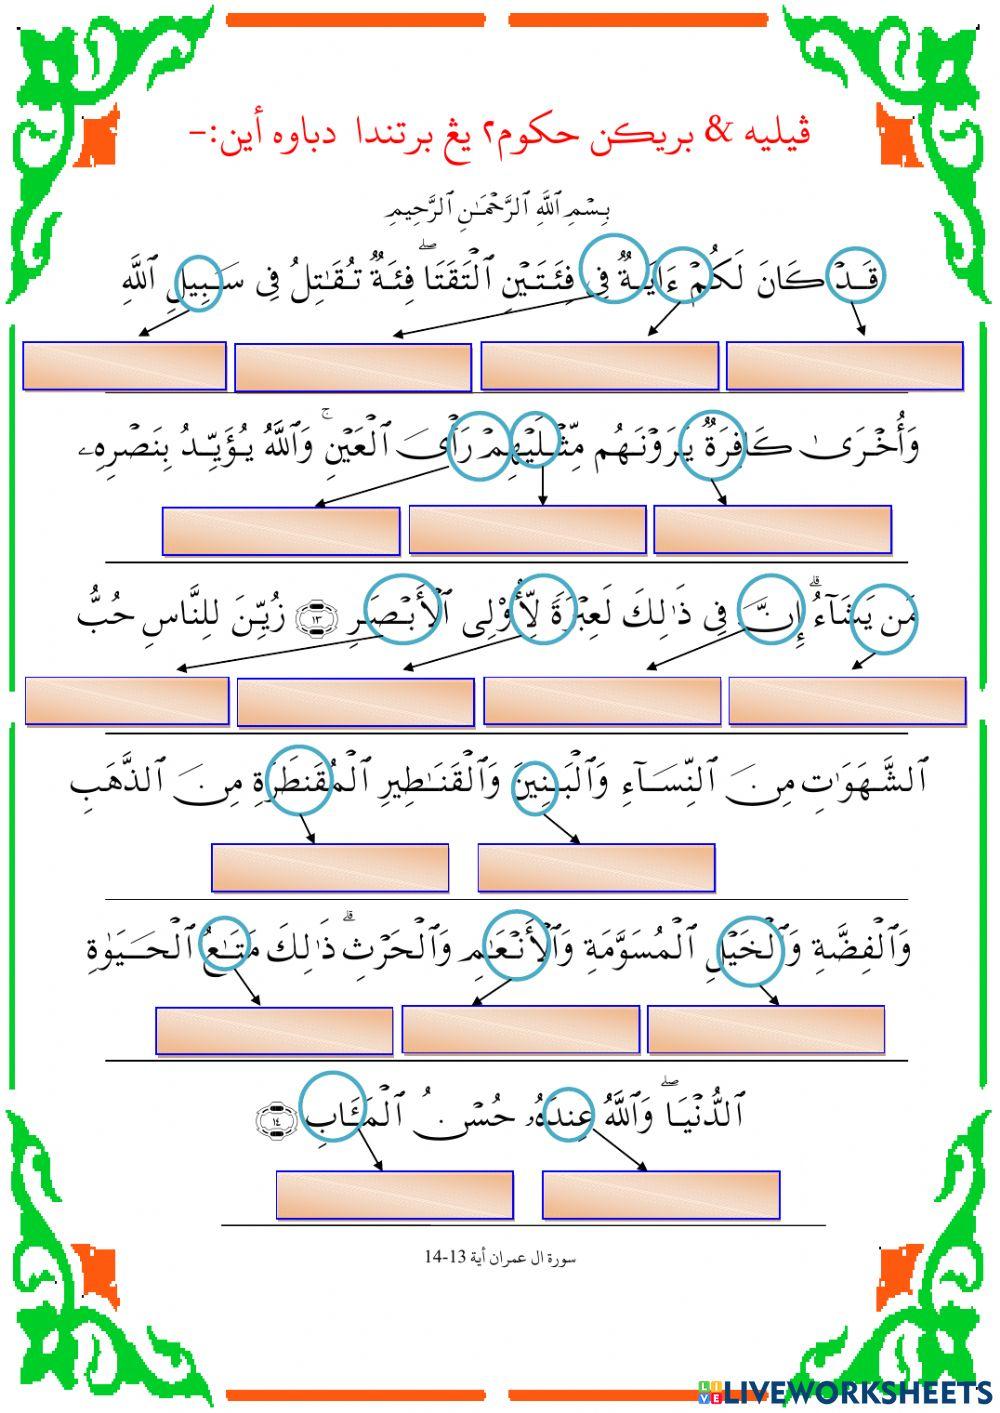 Hukum Tajweed Surah Ali Imran ayat 13-14